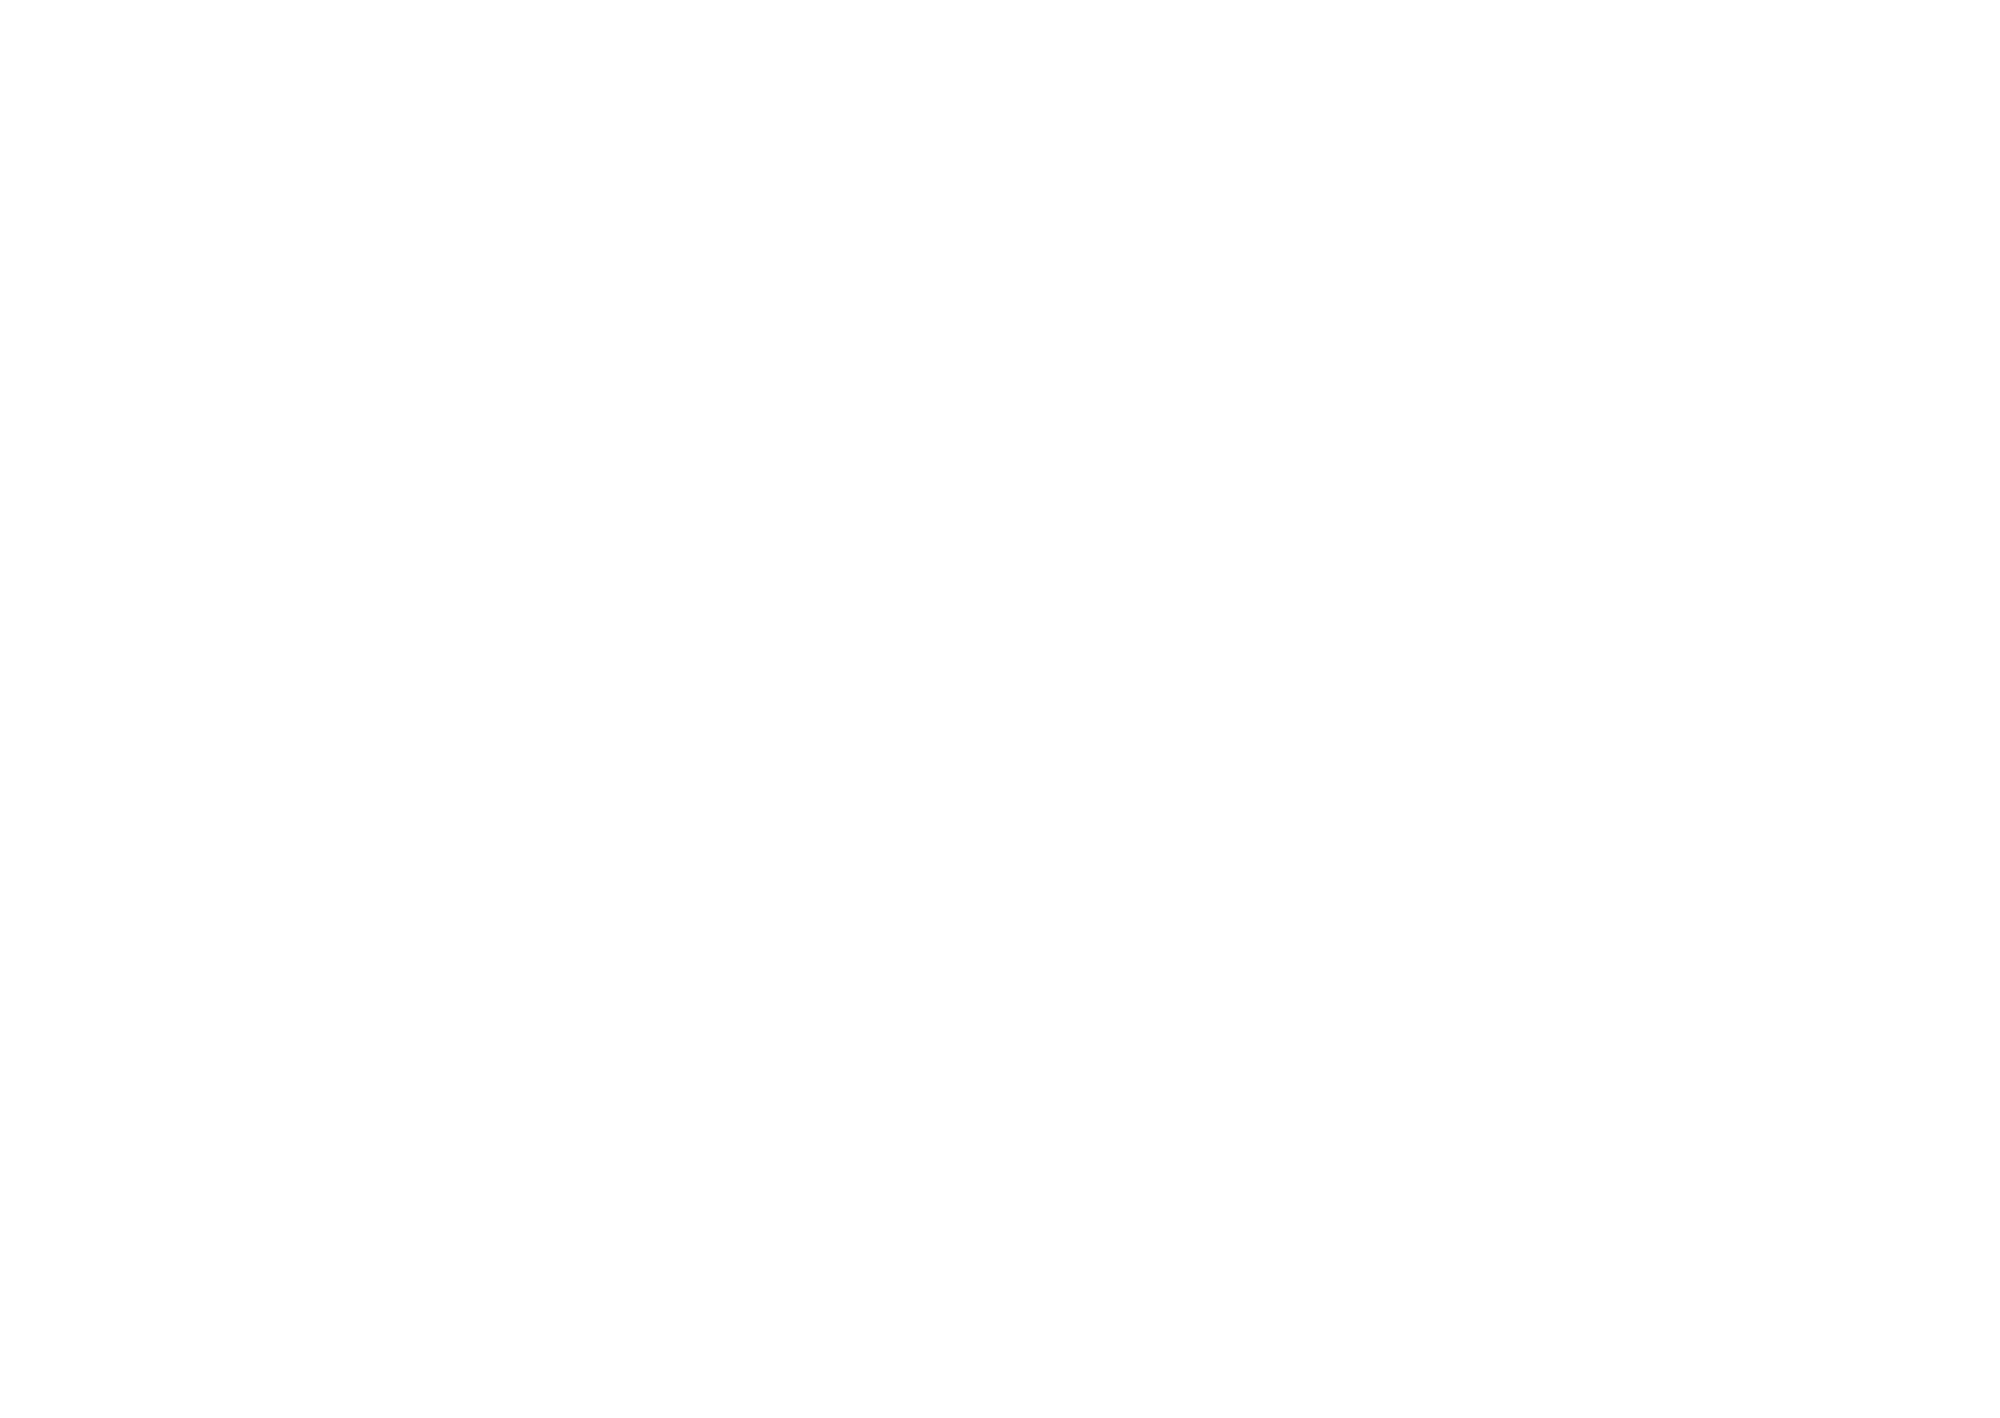 HiPo Driver